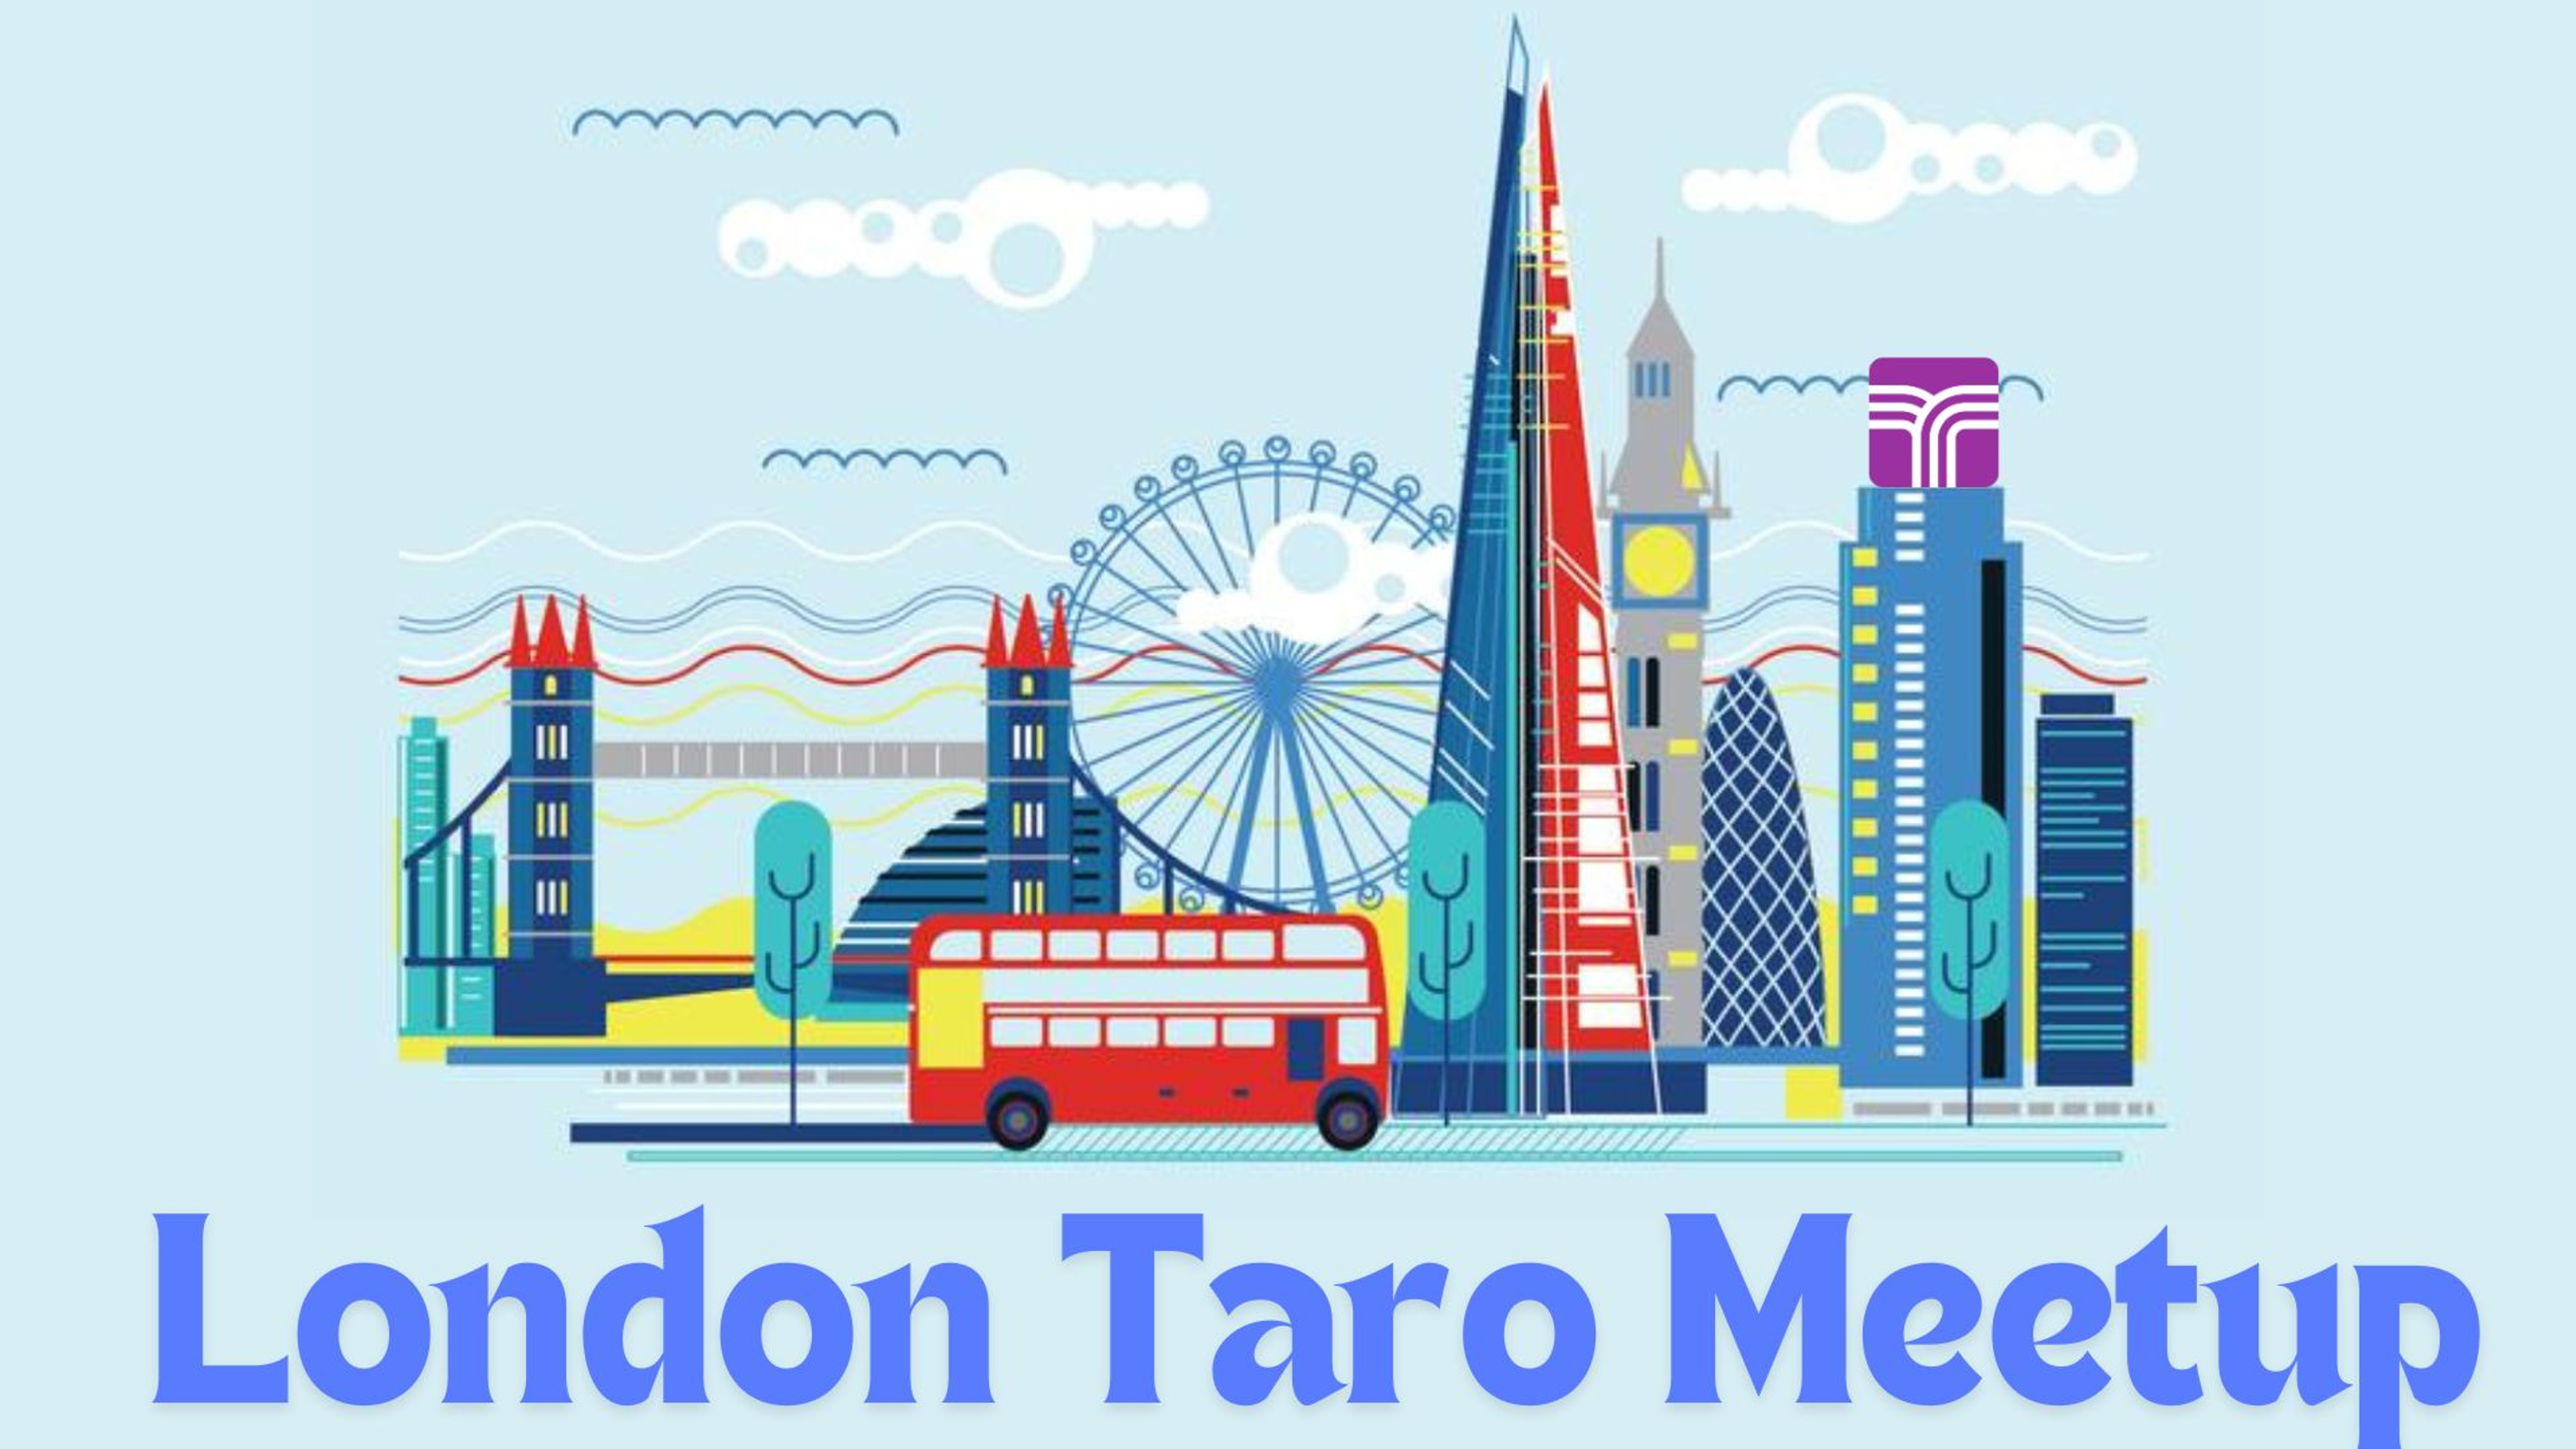 Taro London Meetup event